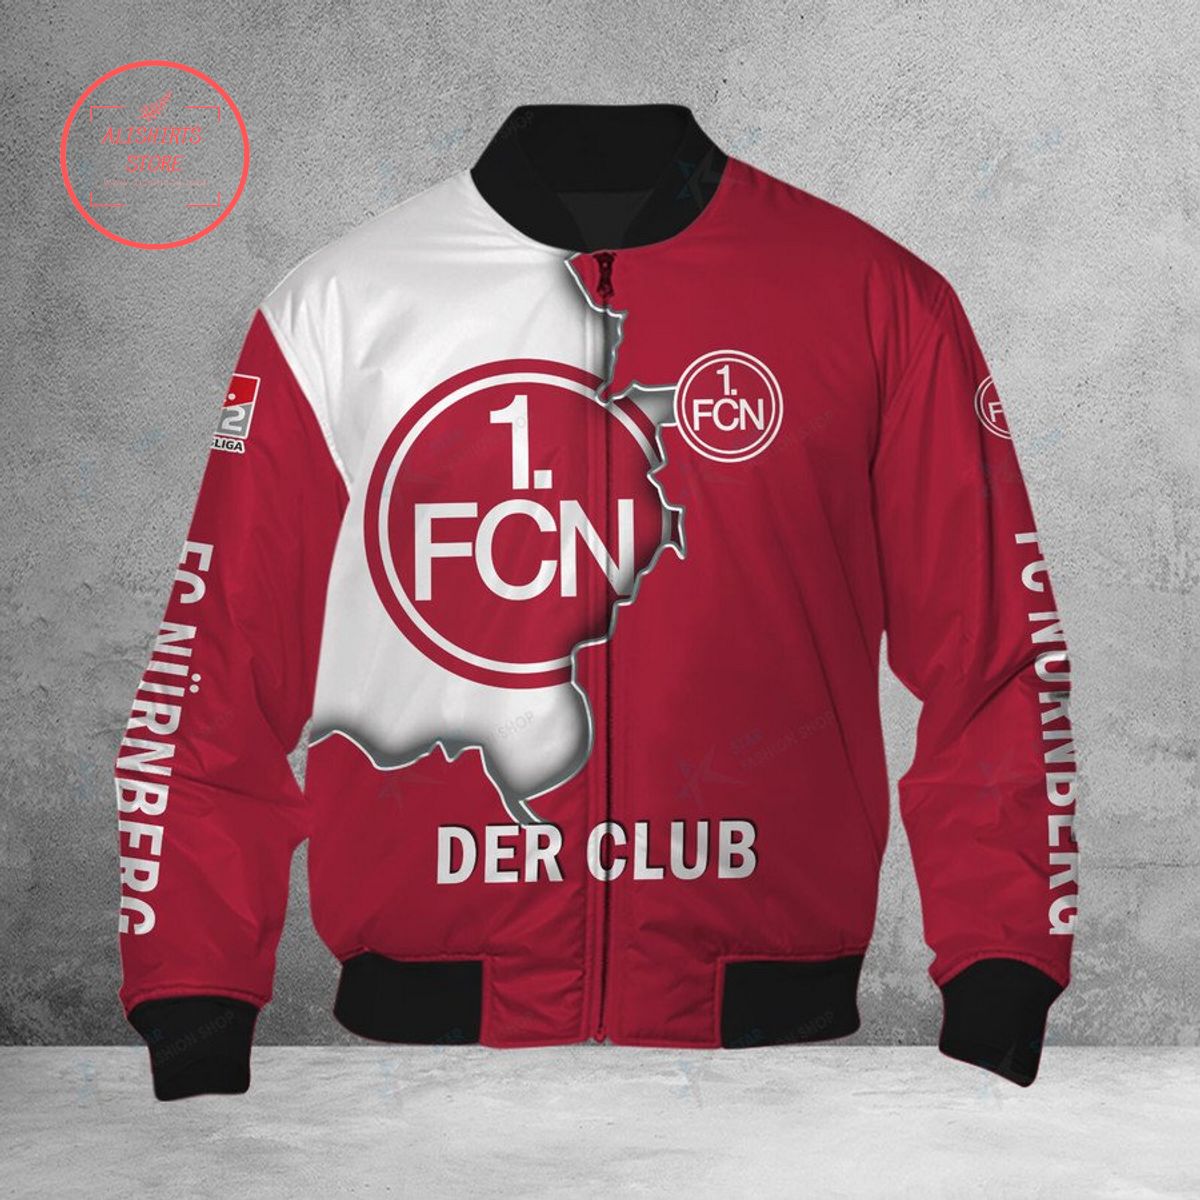 FC Nurnberg Bomber Jacket